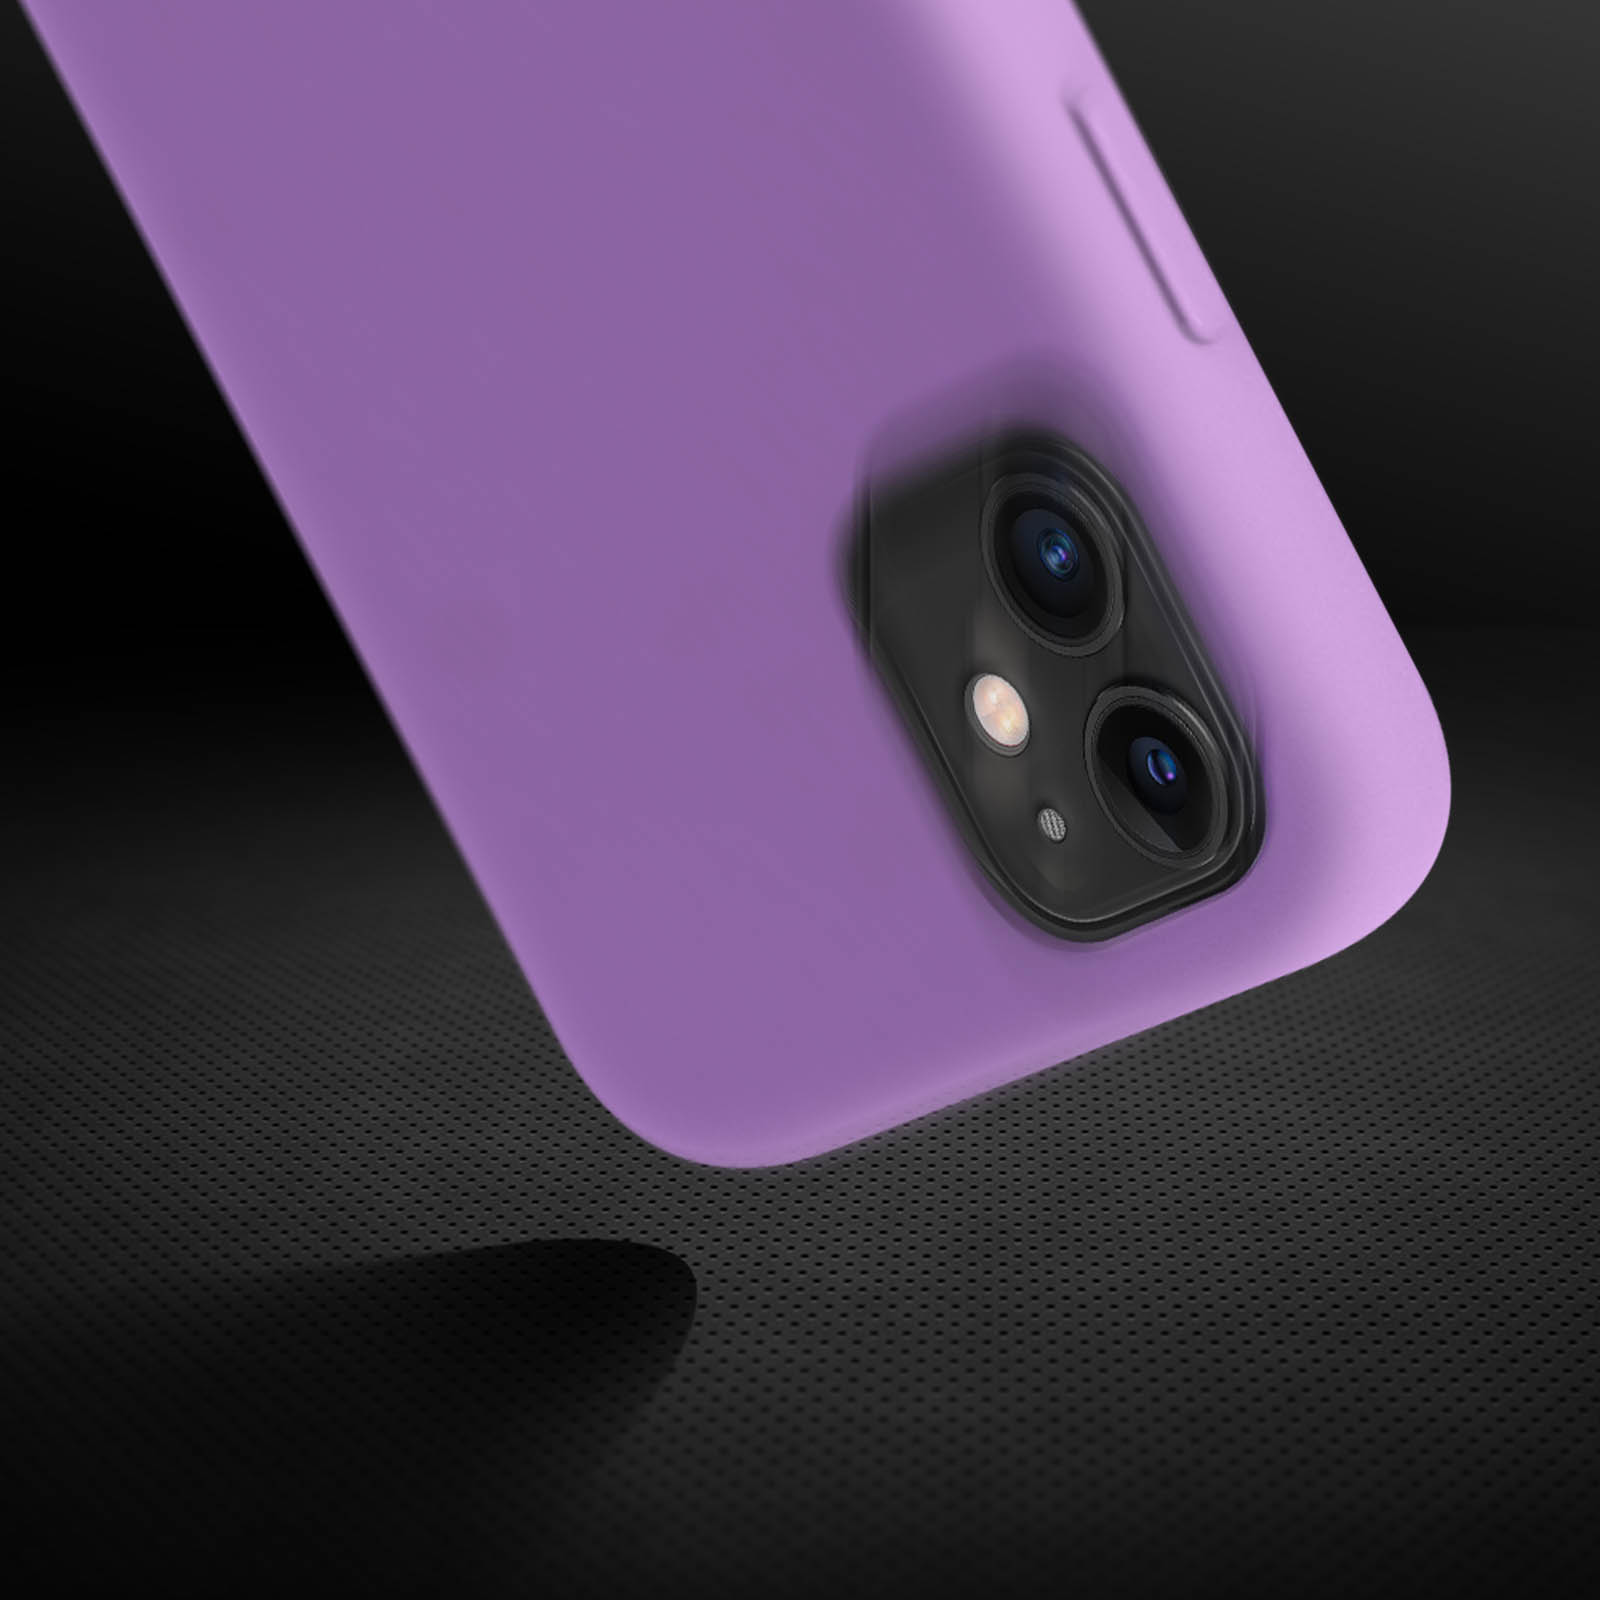 Apple, AVIZAR Violett iPhone 11, Fast Backcover, Series,